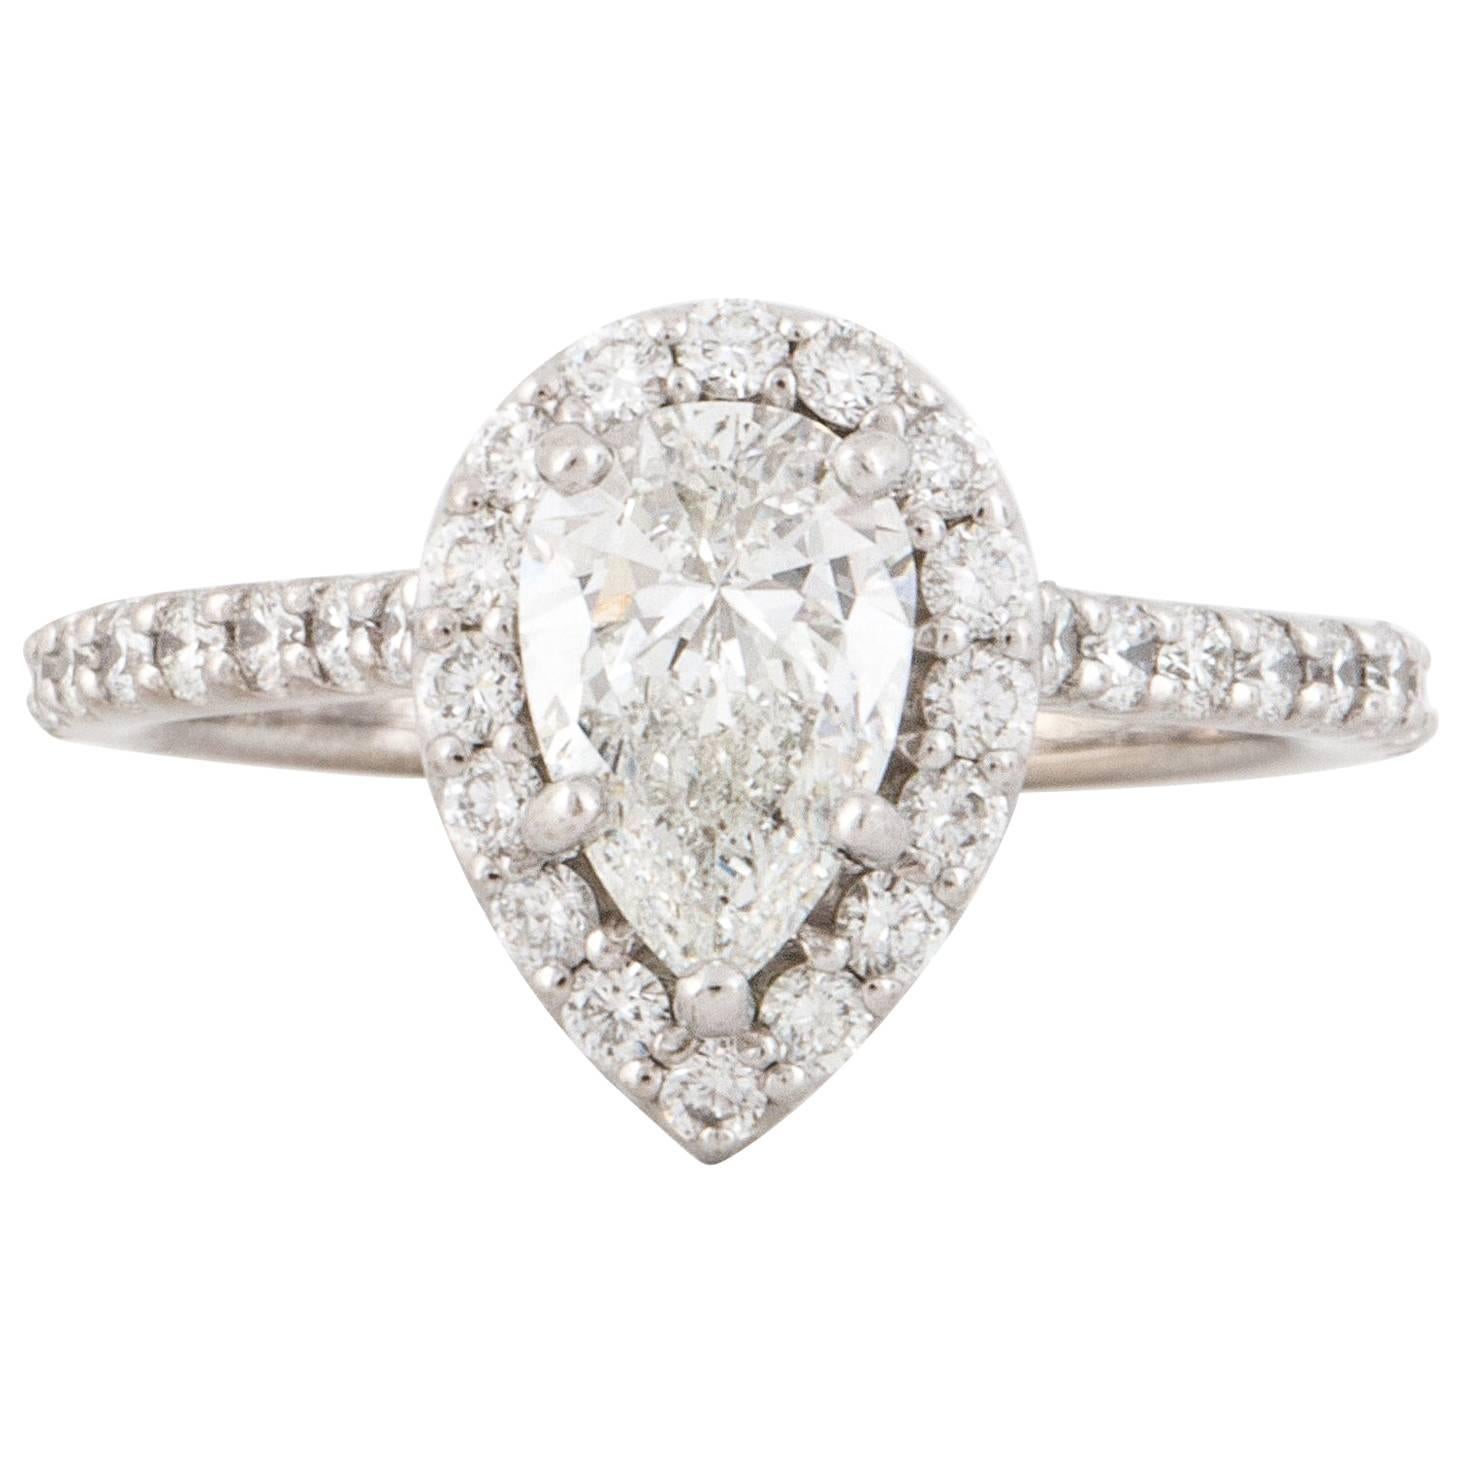 Ritani Pear Shaped Diamond Engagement Ring